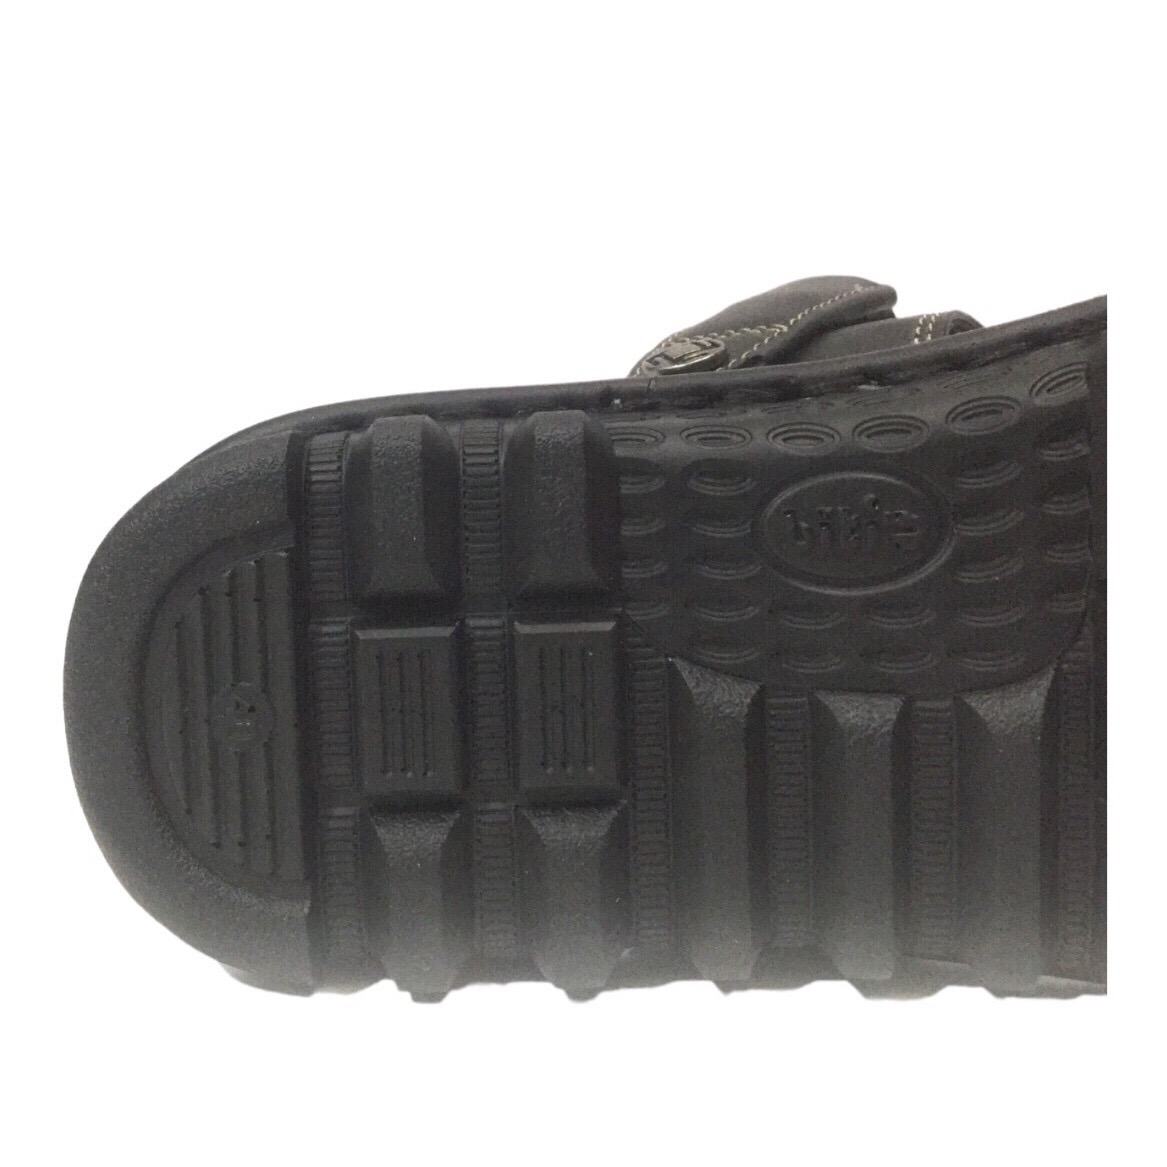 Giày Sandal nam BT quai da DPM033644DEN (màu đen)